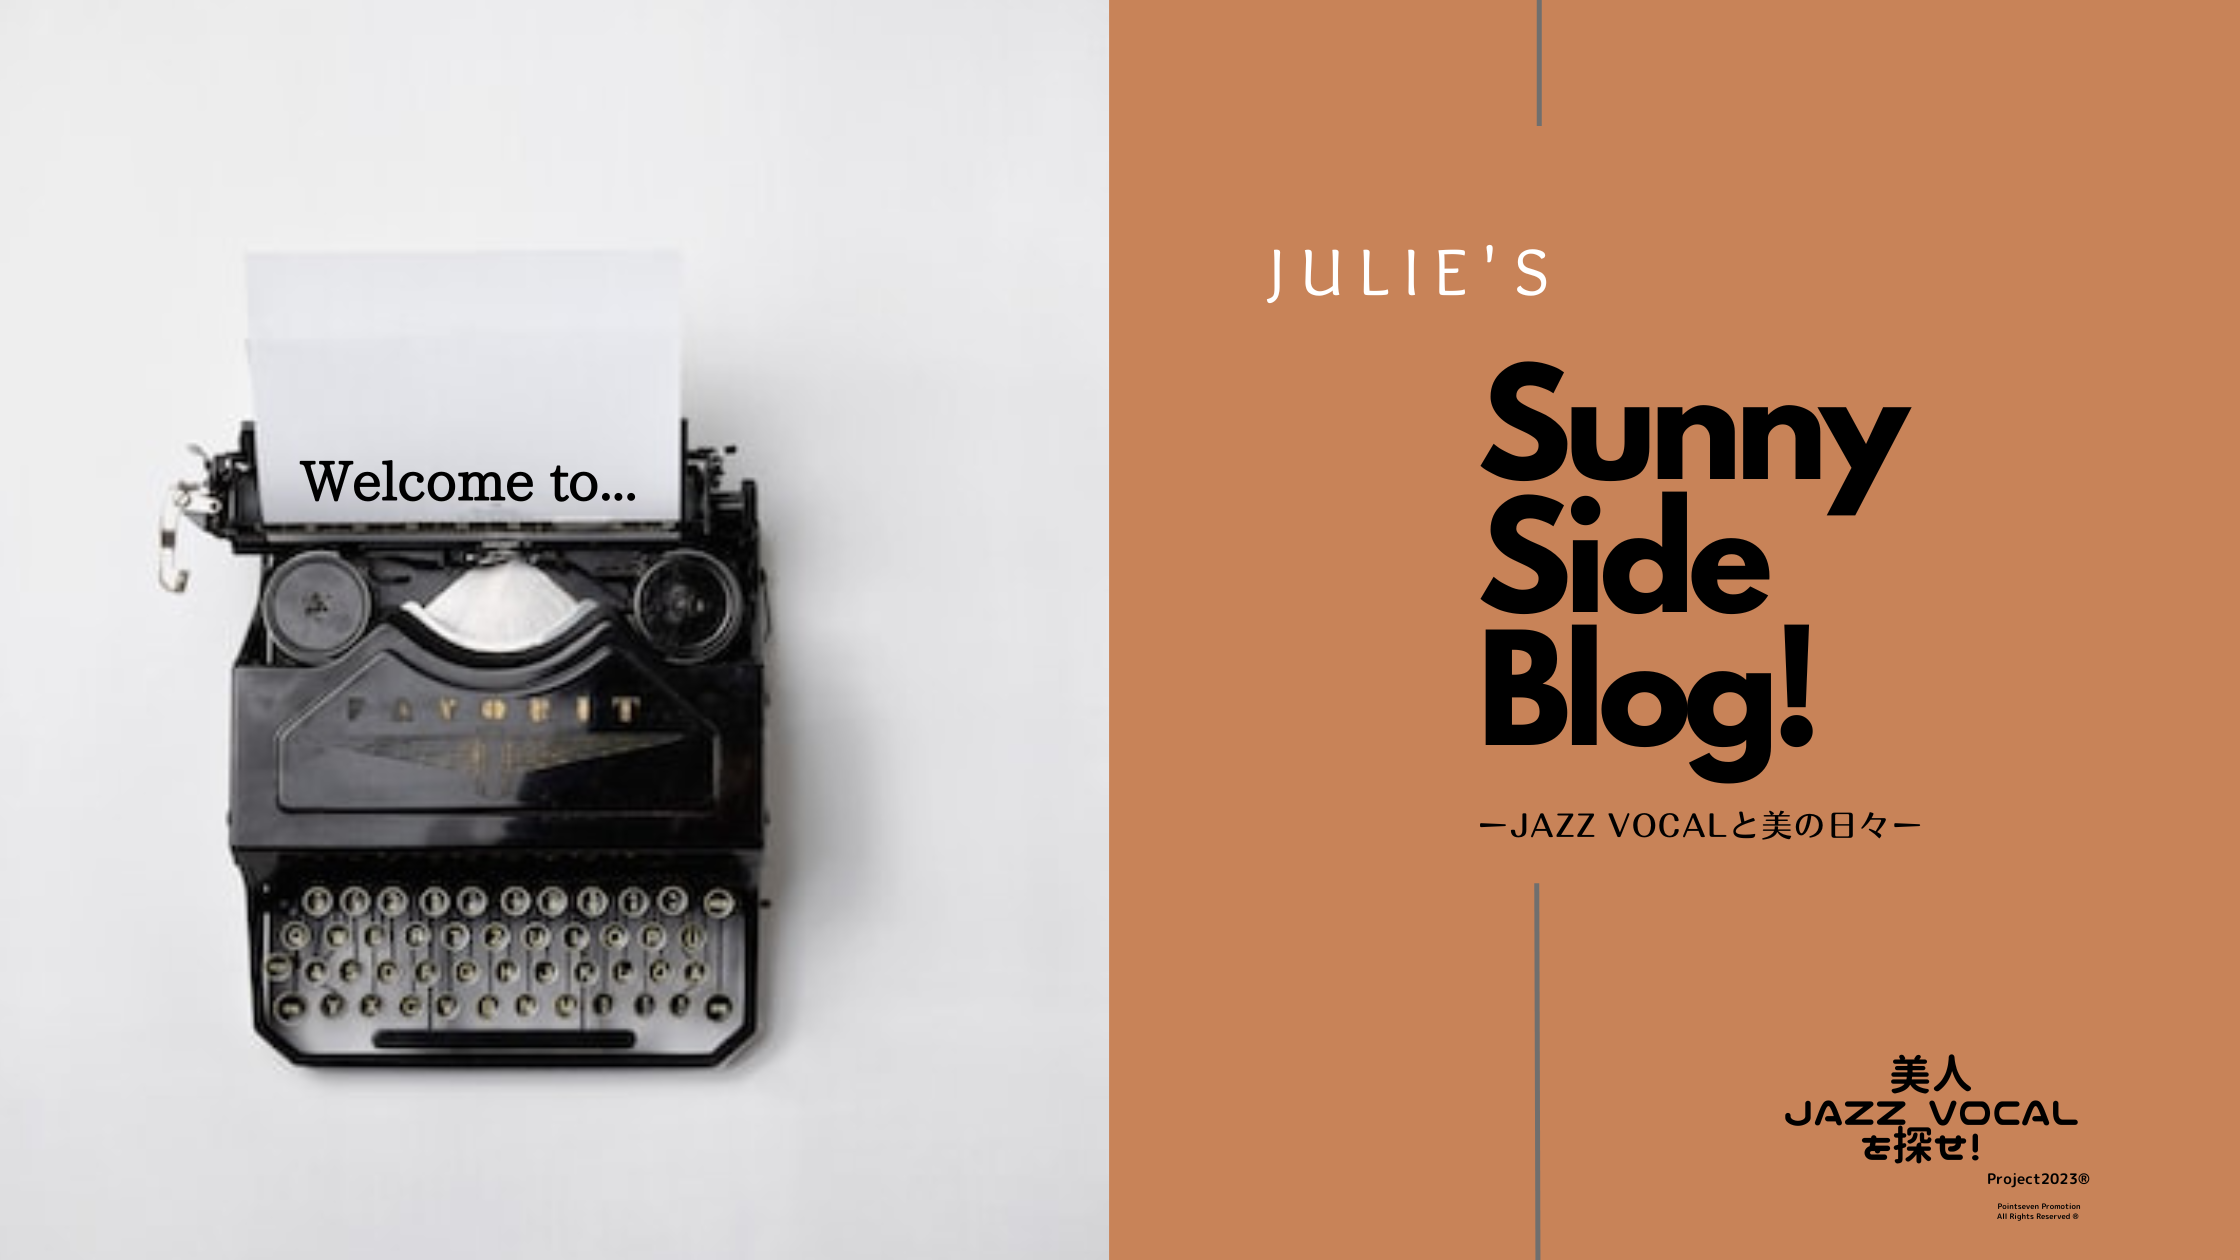 Julieの Sunny Side Blog